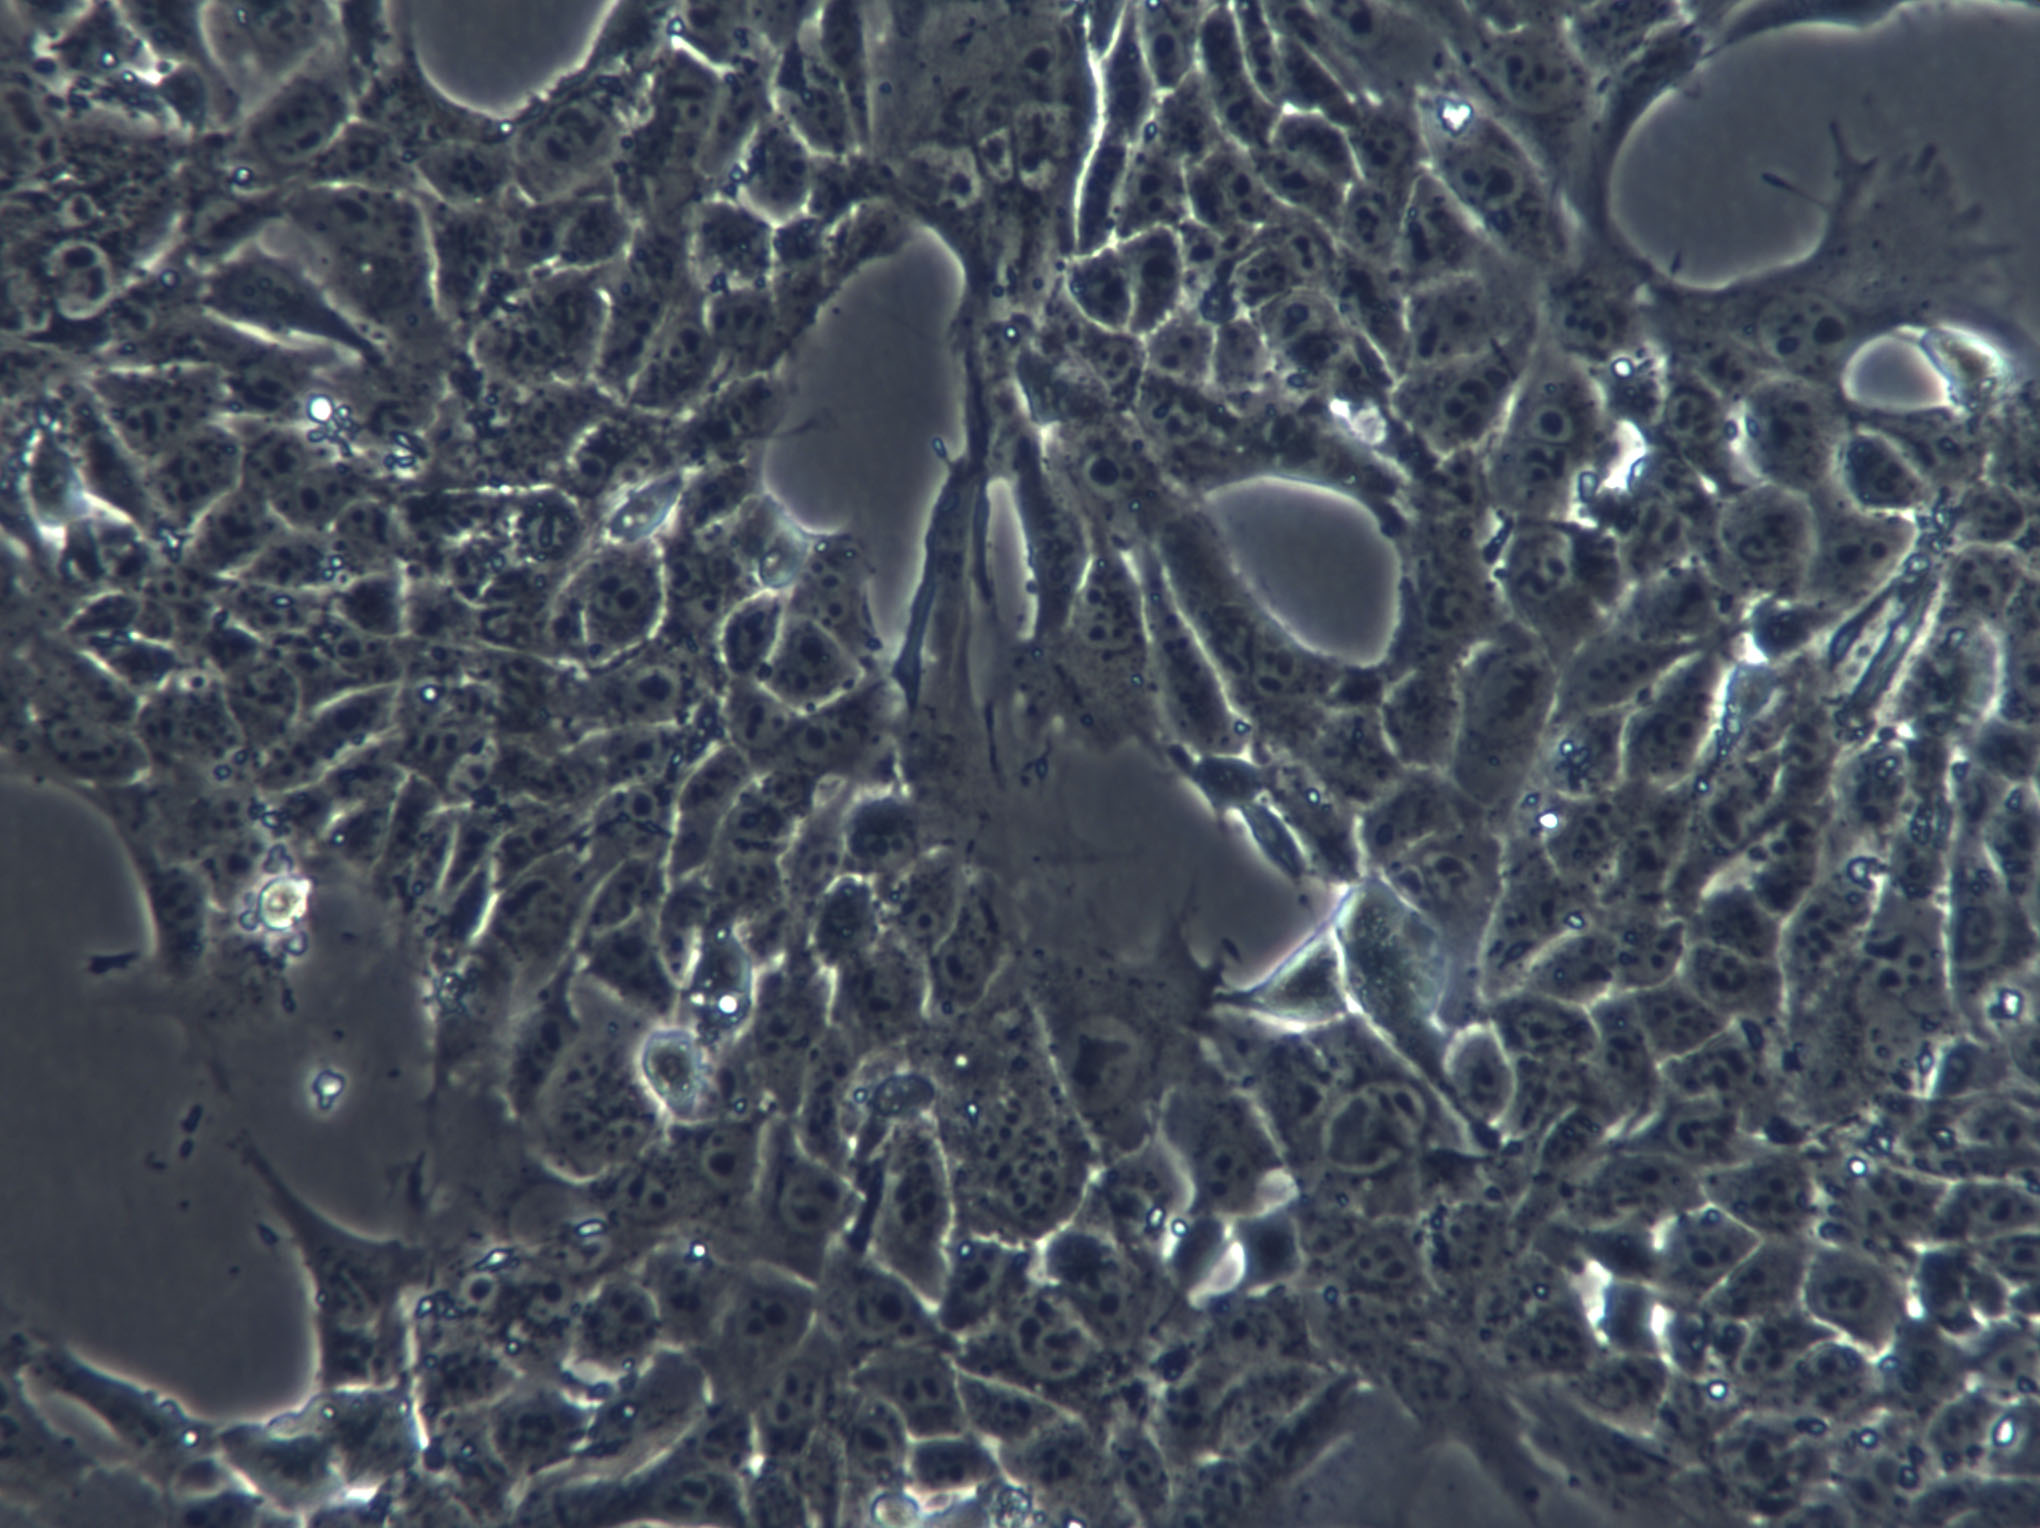 SNU-878 Cells|人肝癌克隆细胞,SNU-878 Cells